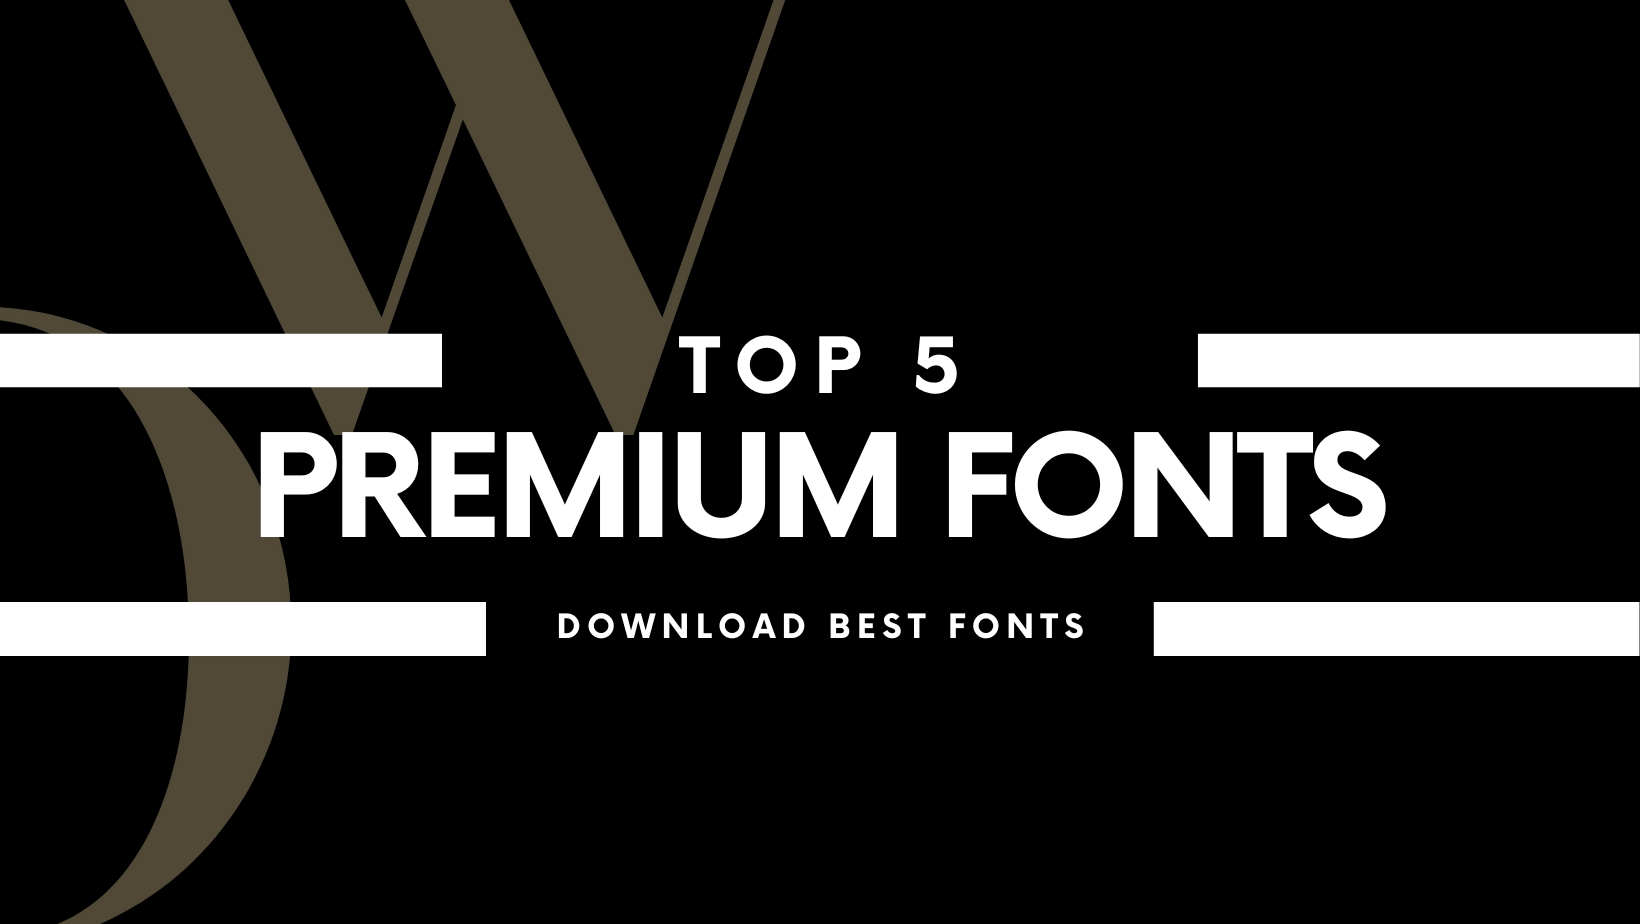 Top 5 Premium Fonts Free Download